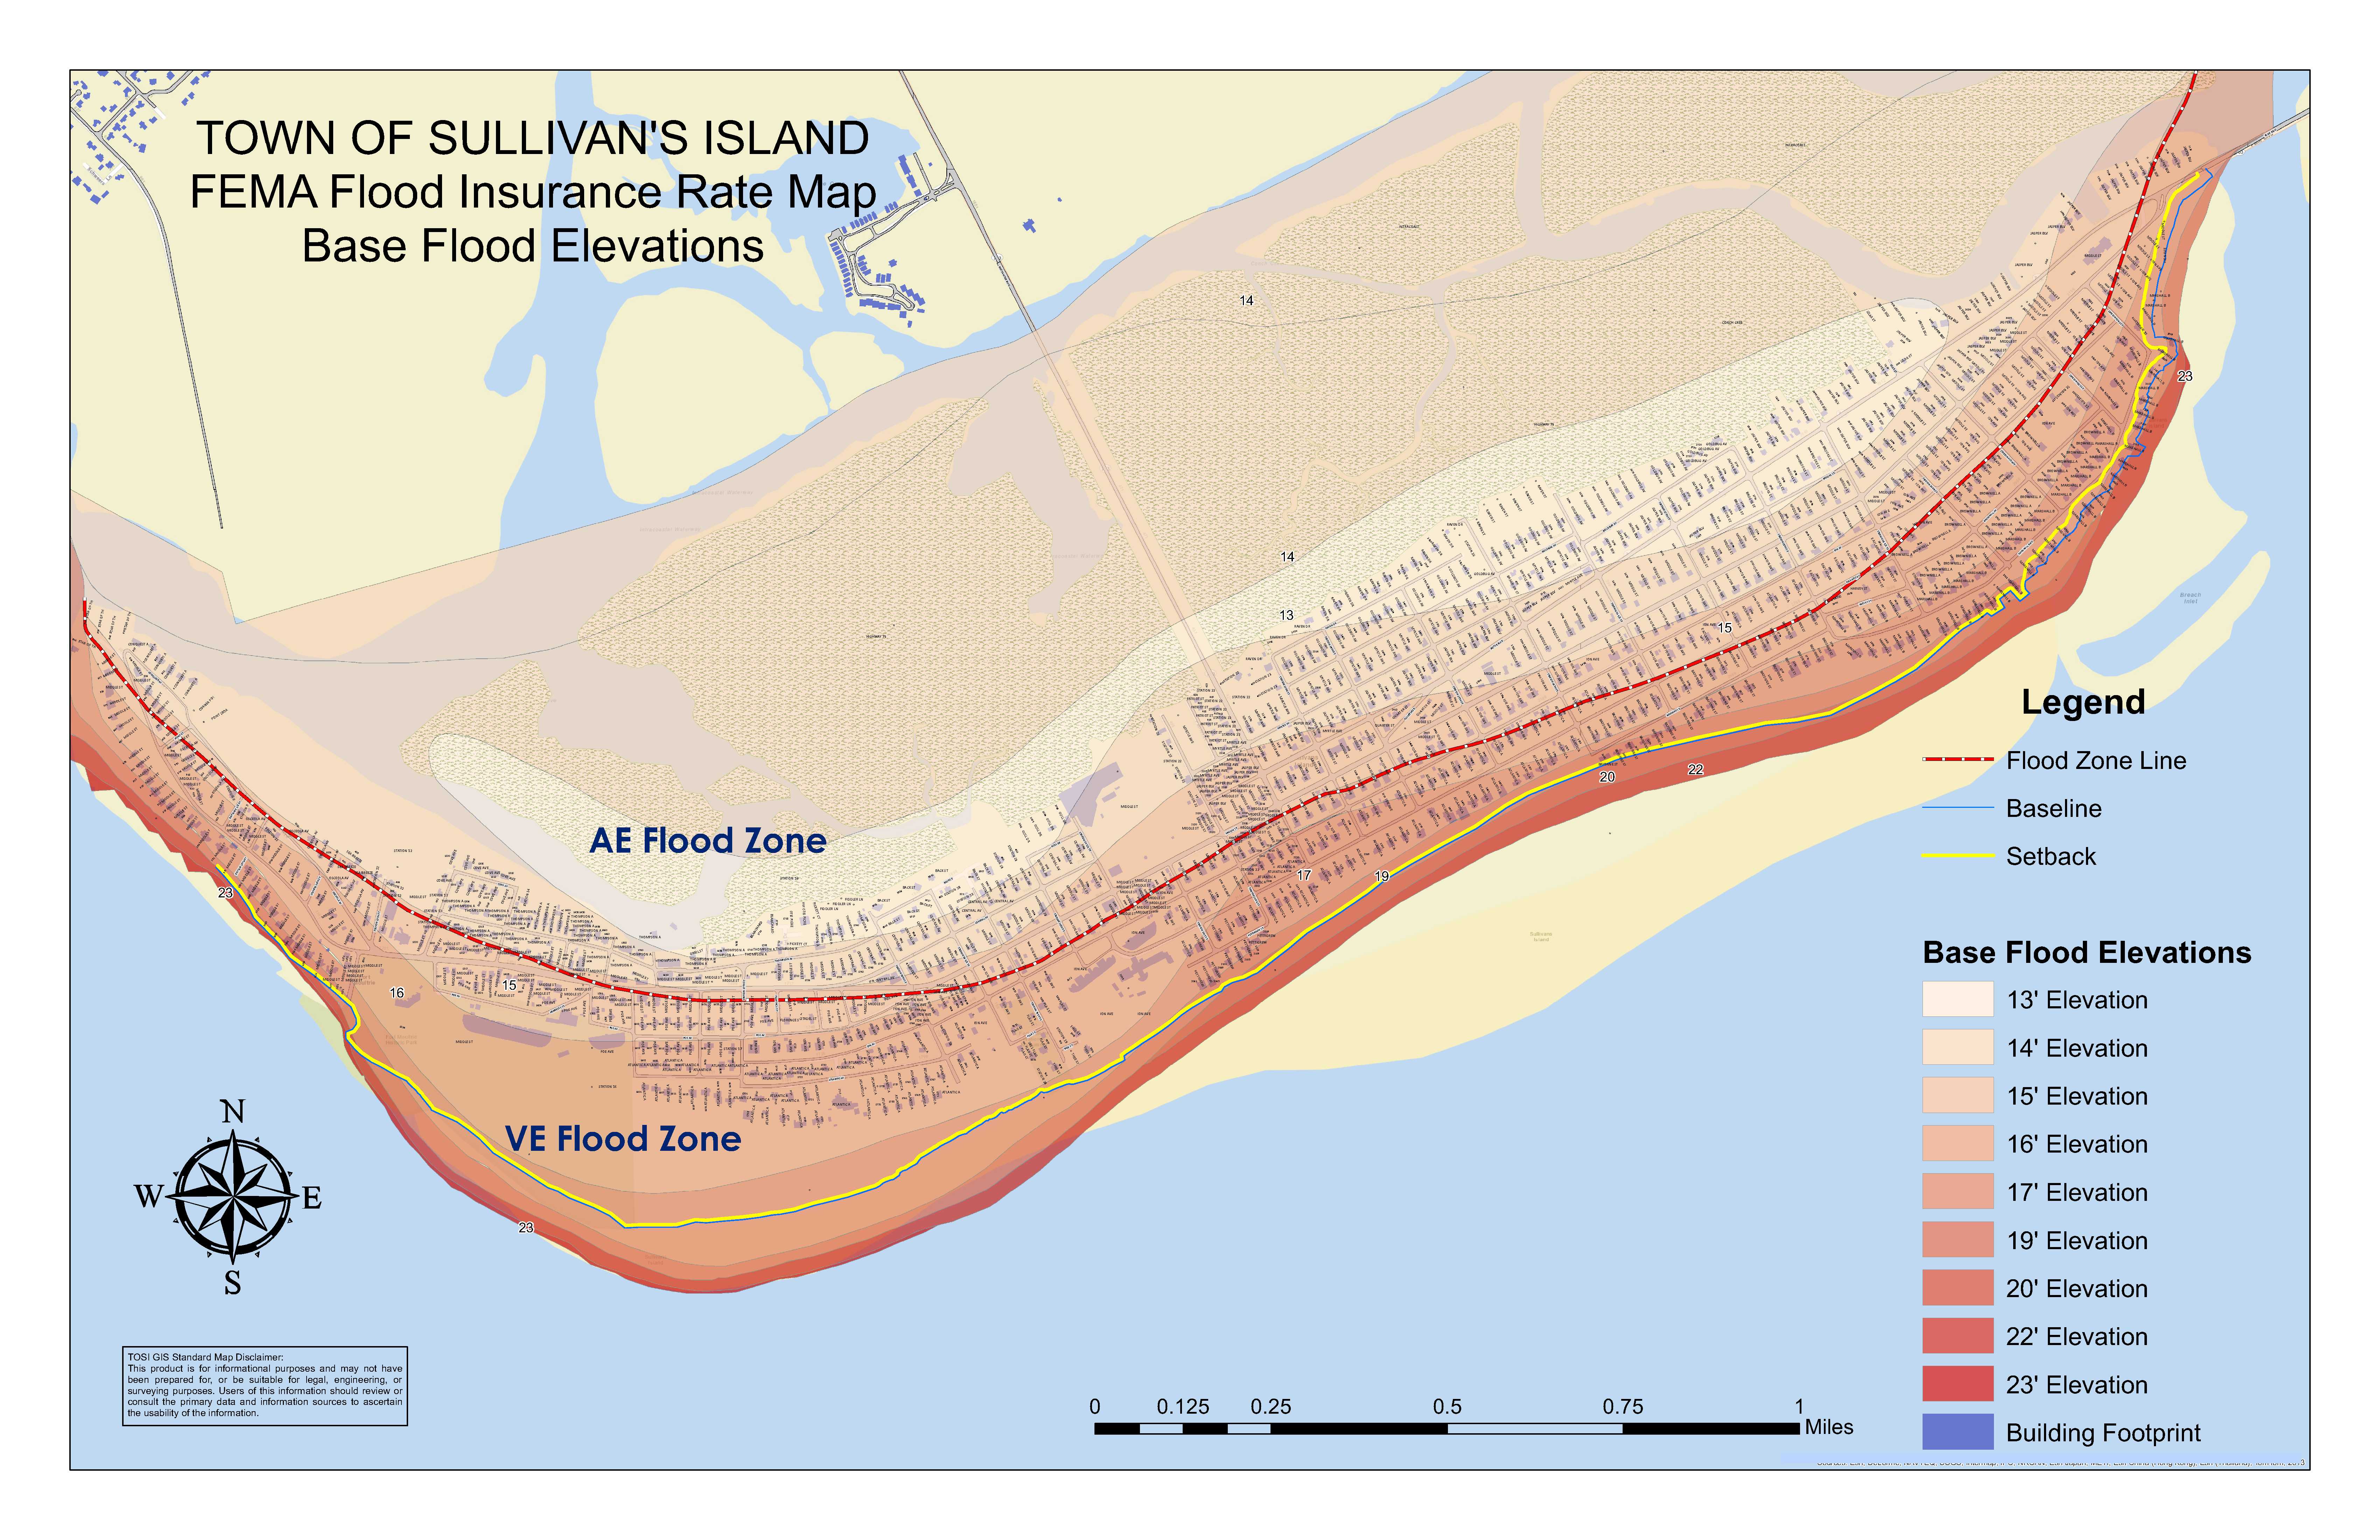 Town of Sullivan's Island Base Flood Elevation Map (PIC)